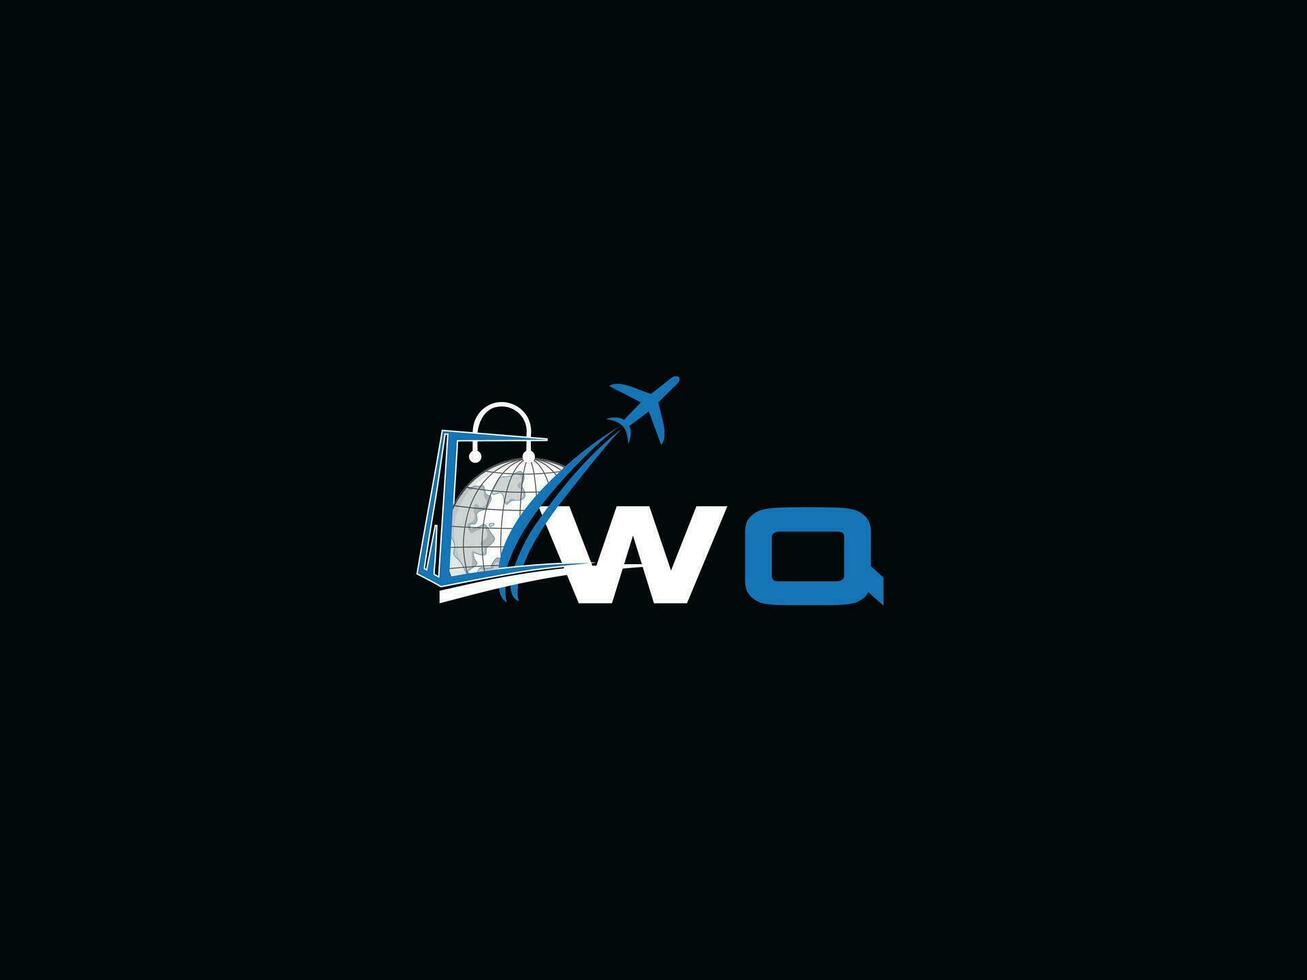 einzigartig Luft Reise wq Logo Symbol, kreativ global wq Initiale Reisen Logo Brief vektor